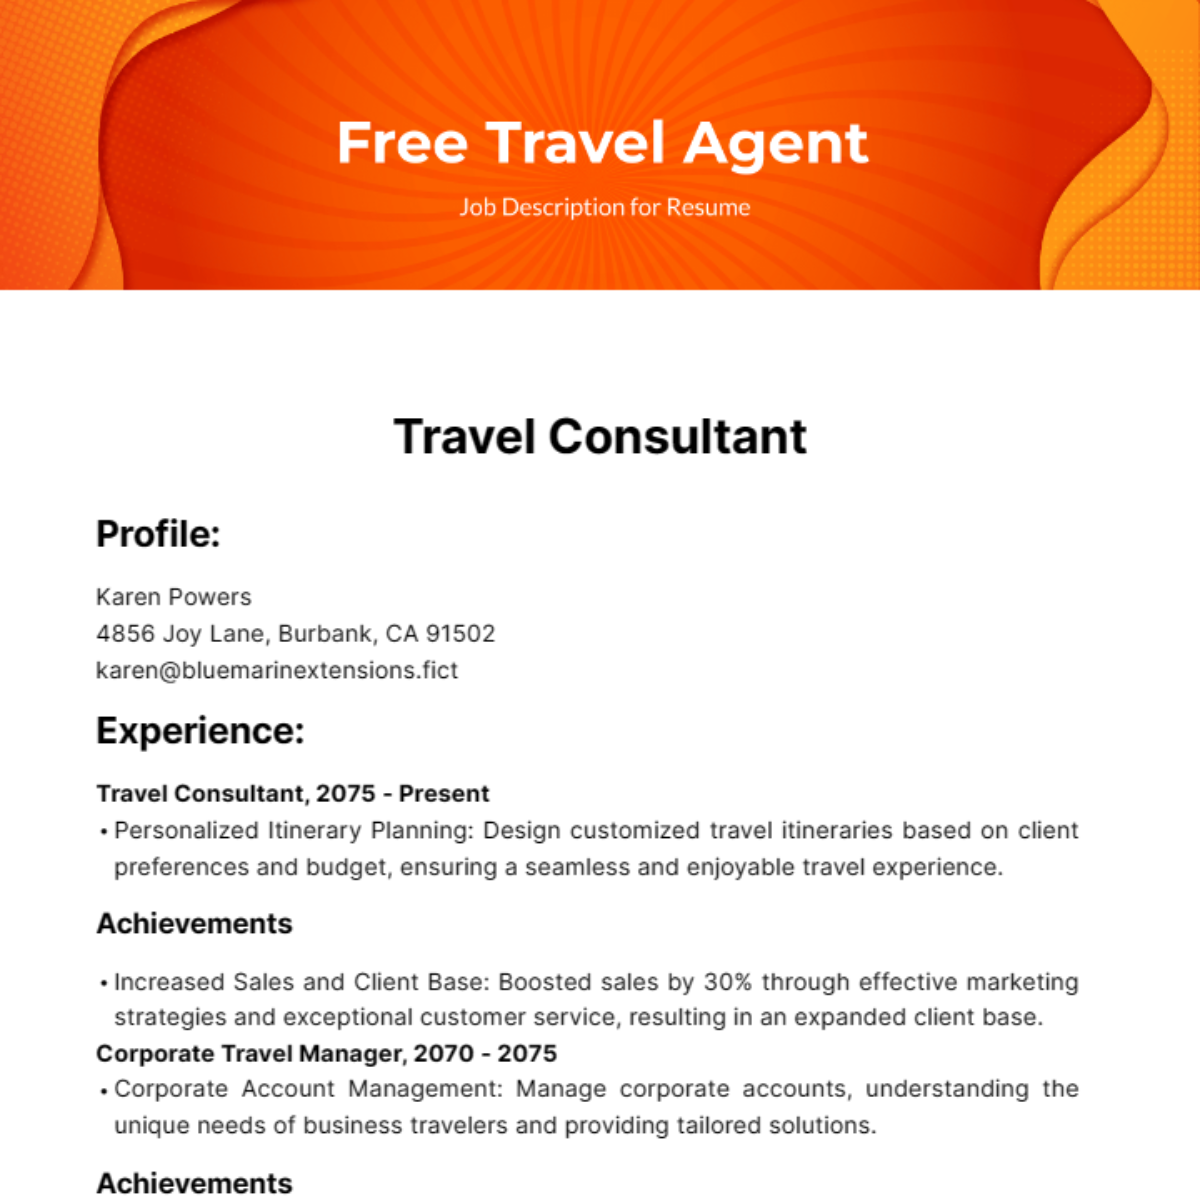 Travel Agent Job Description for Resume Template